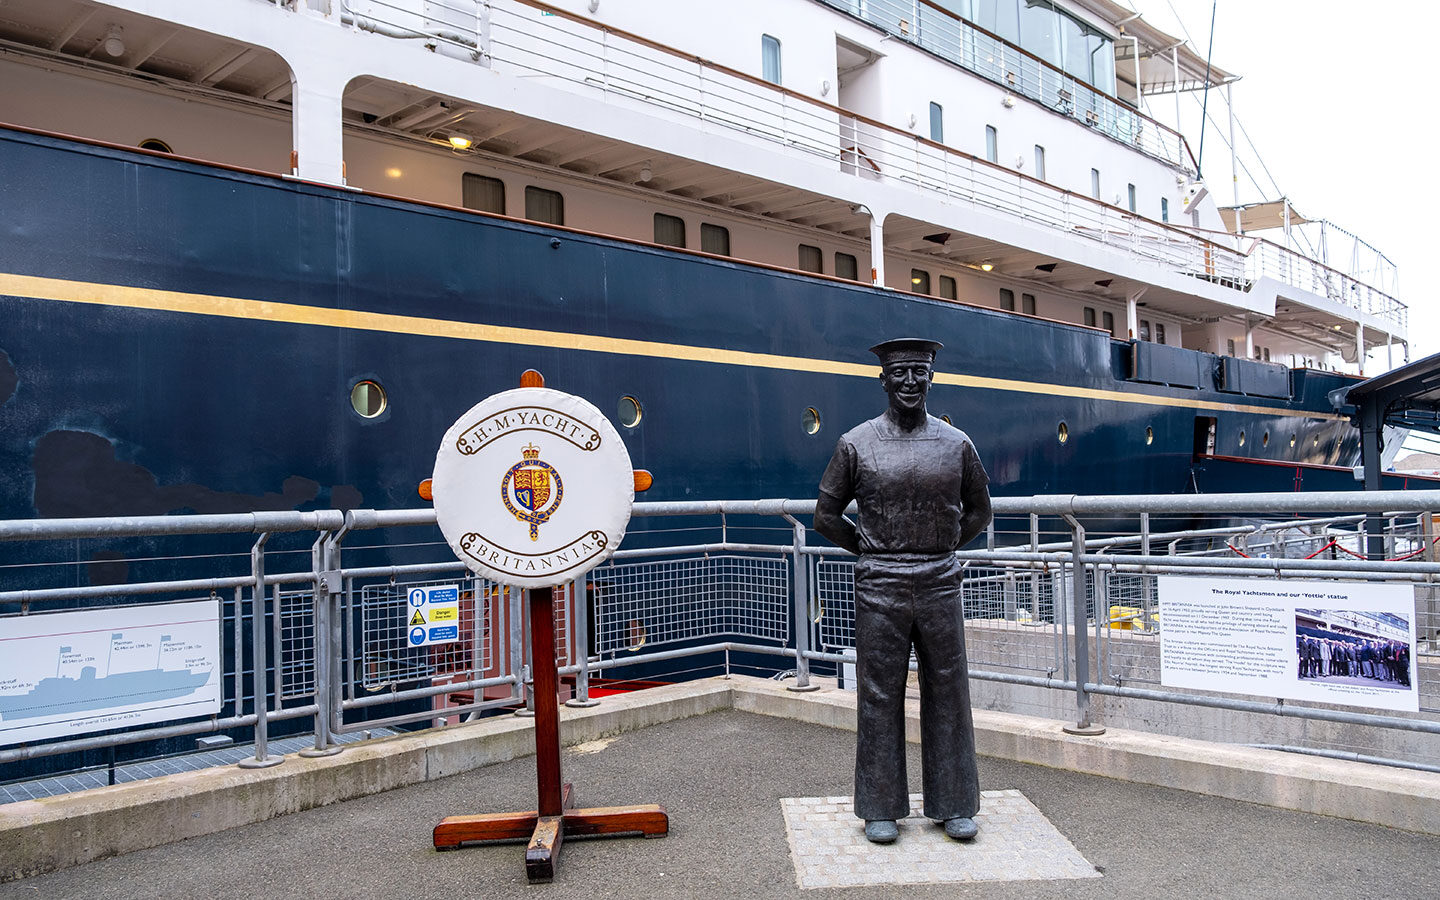 The Royal Yacht Britannia in Edinburgh on a budget